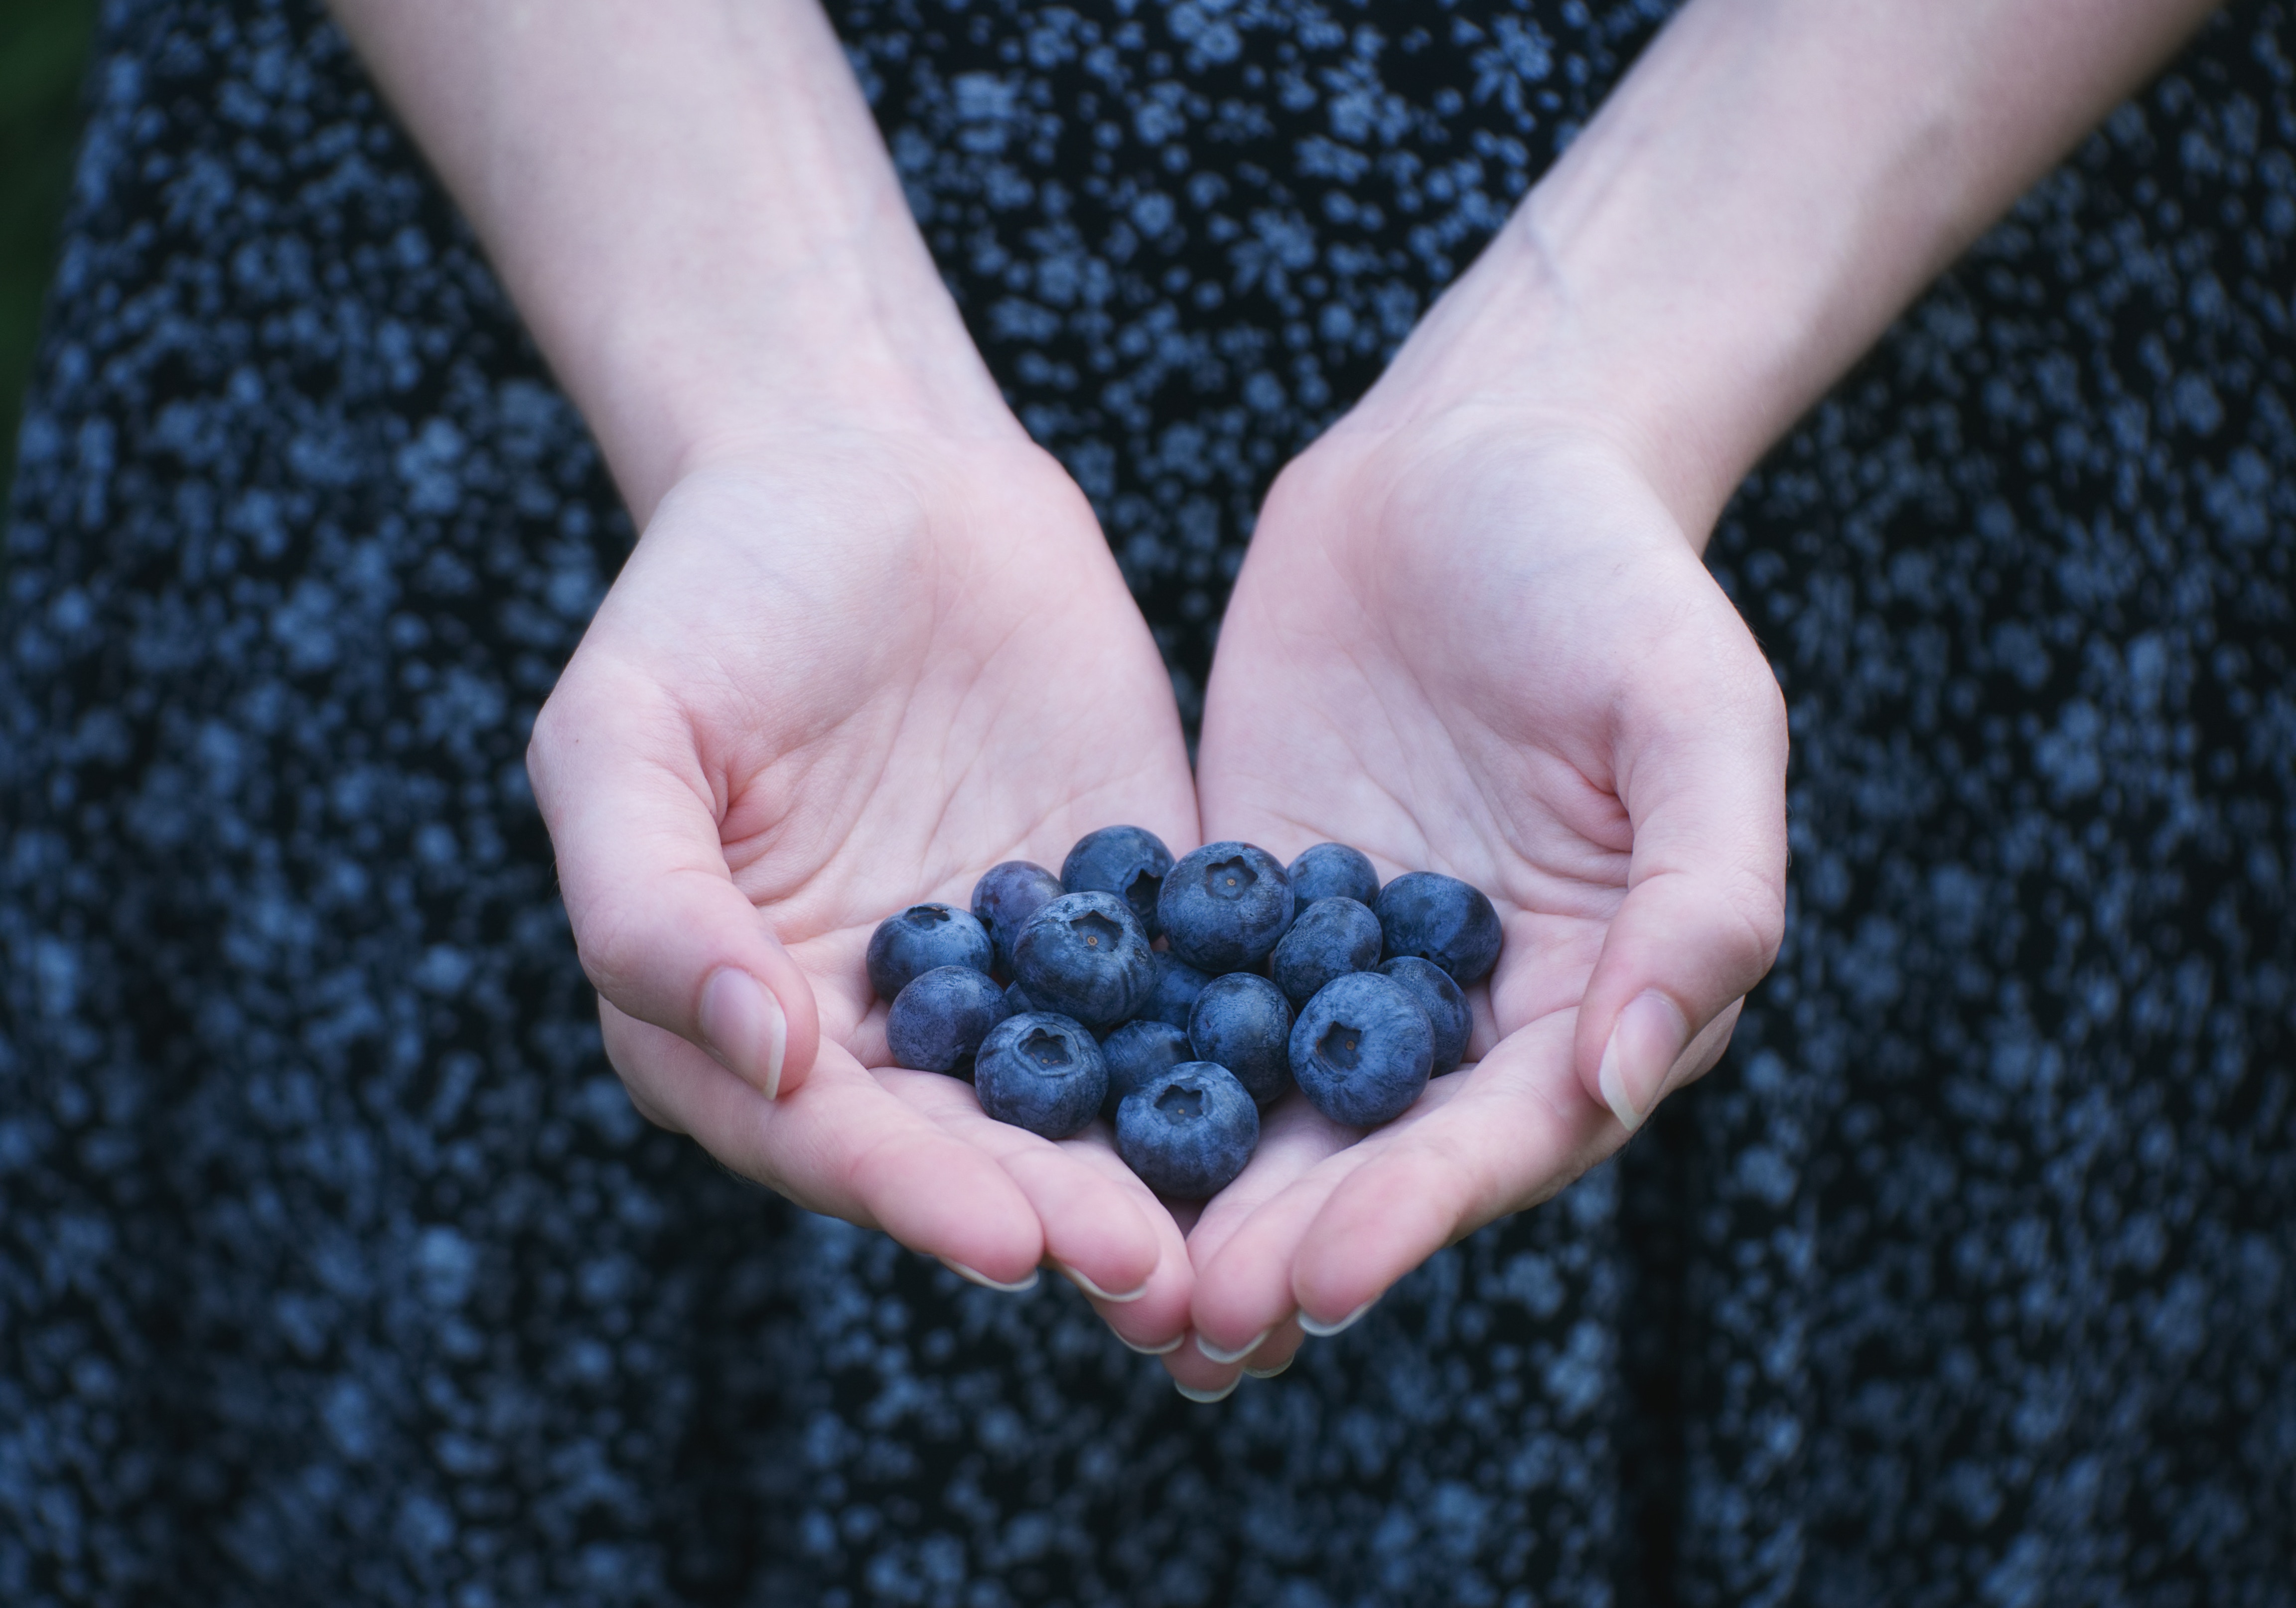 freetoedit blueberry hands bluedress image by @freetoedit.